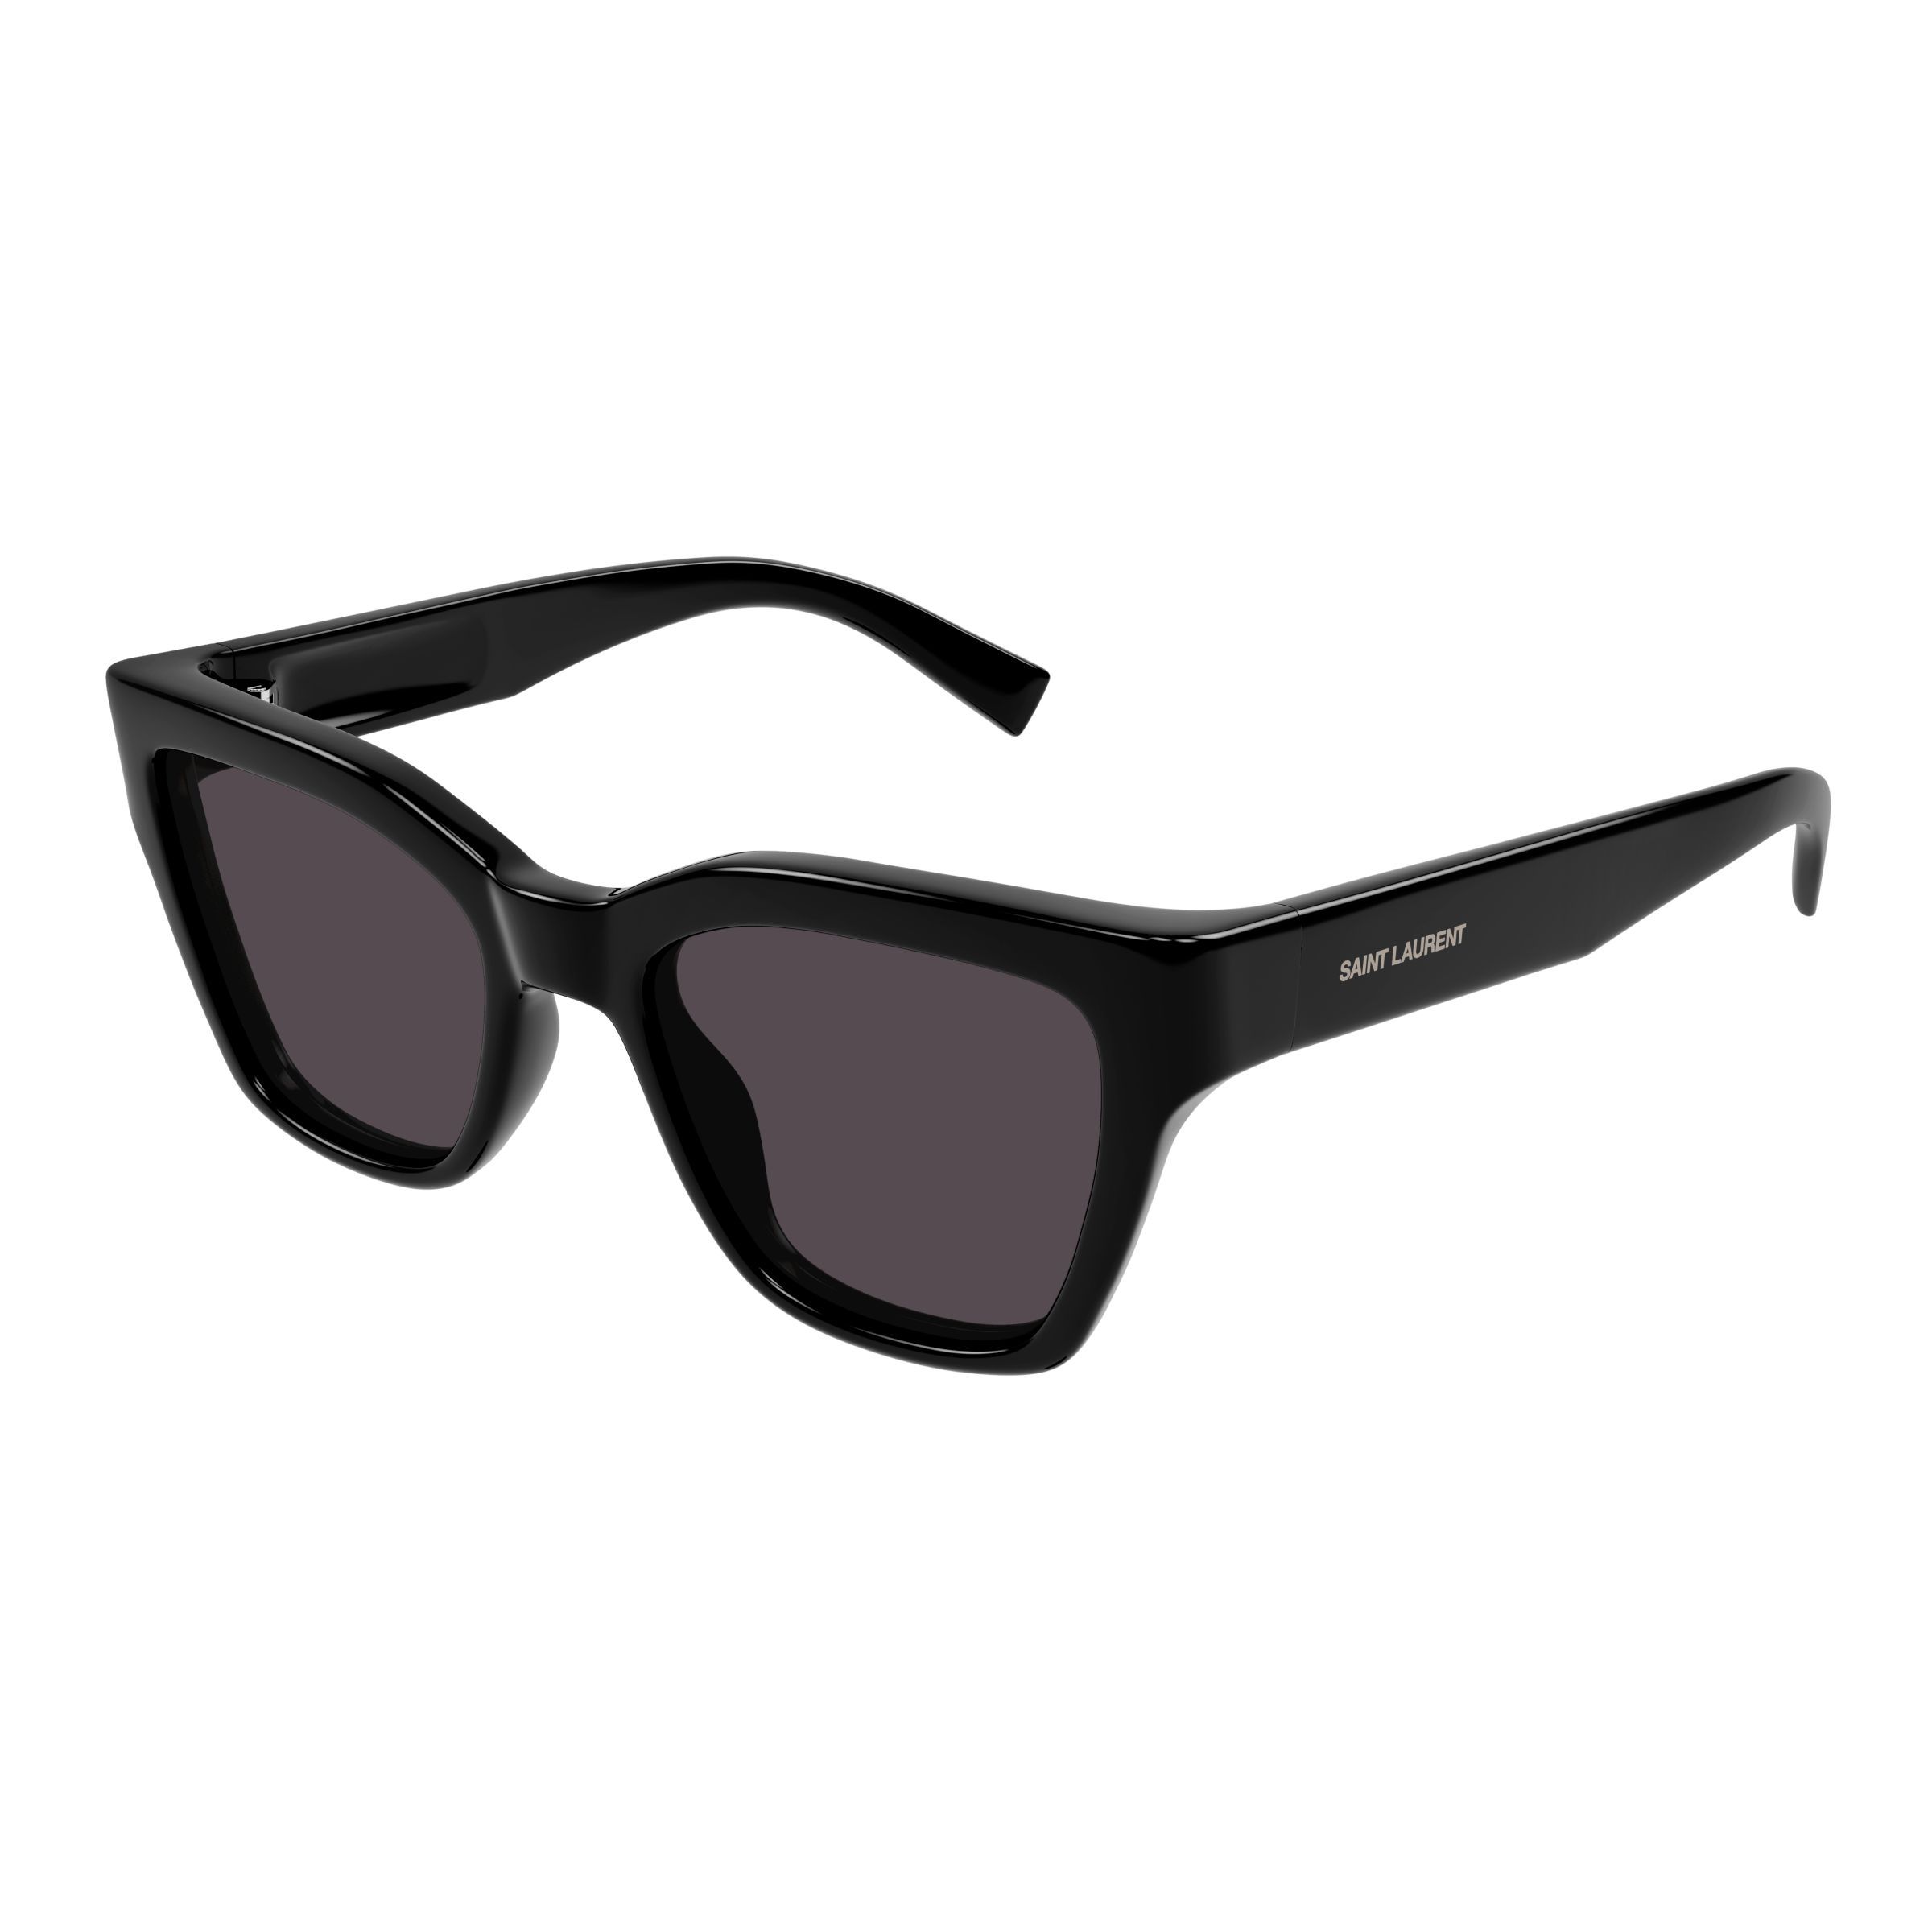 SL 641 Cat Eye Sunglasses  001 - size 52